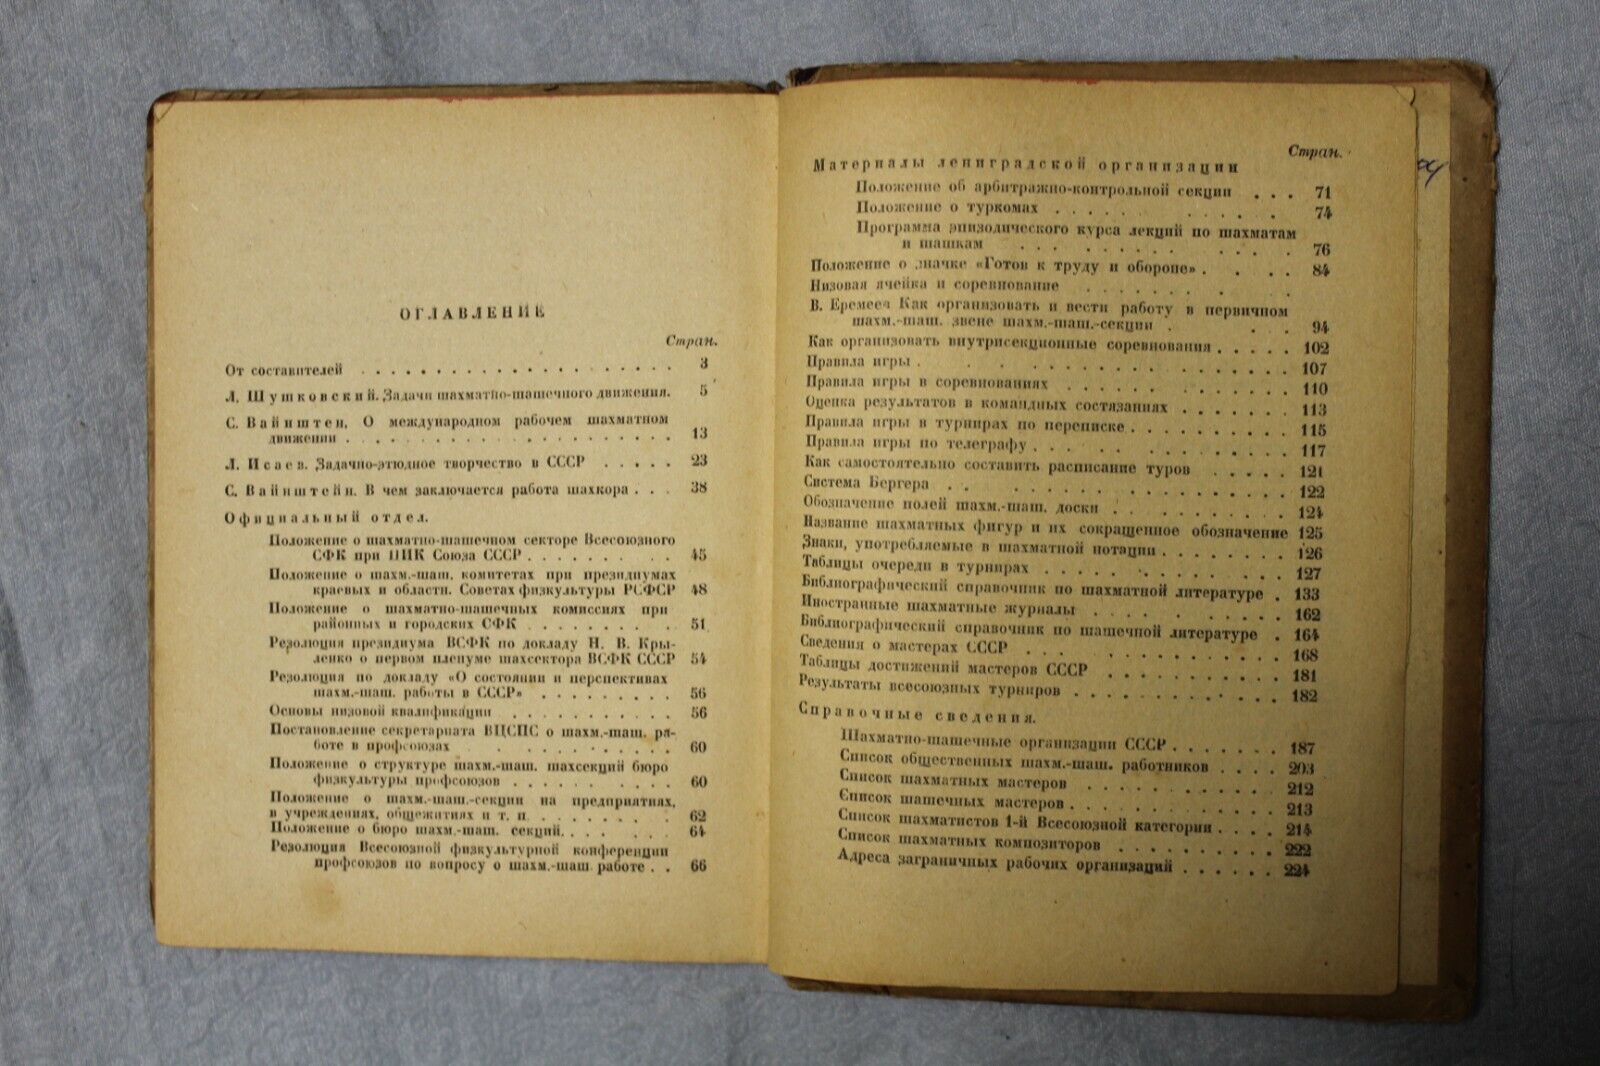 11232.Chess&check book: Chess Companion, V.Eremeev, R.Goltz, Leningrad – Moscow, 1932